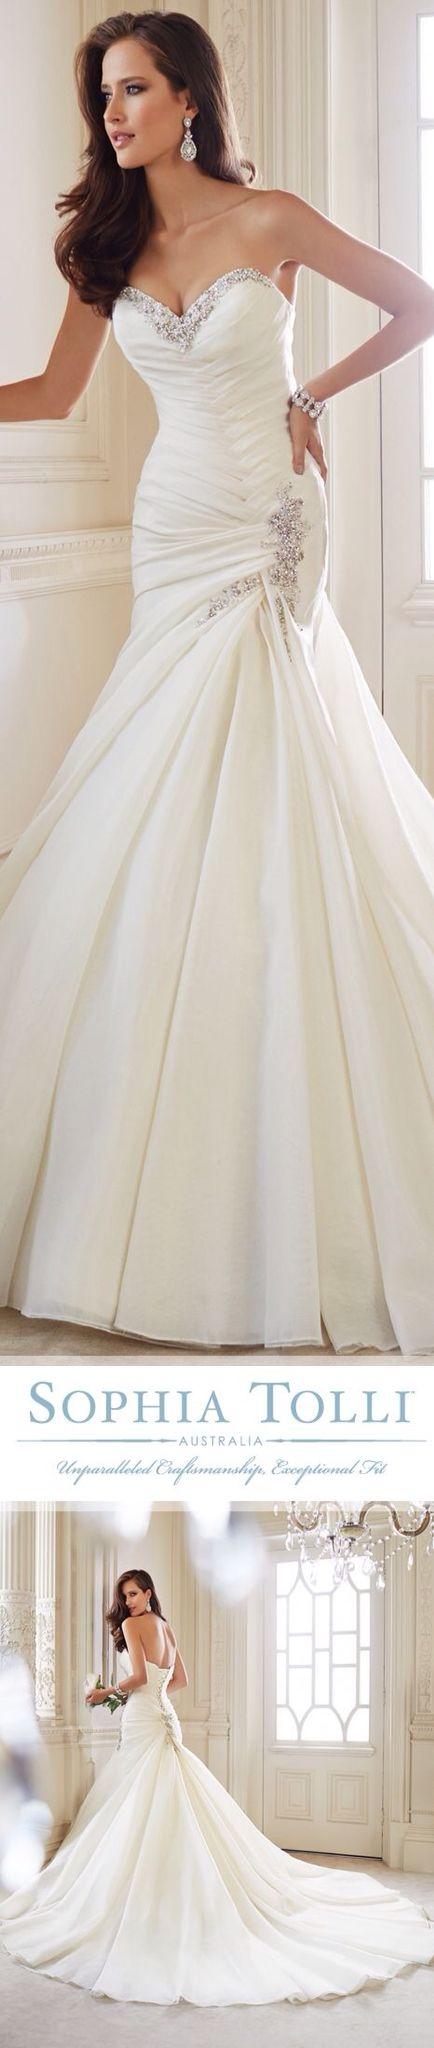 Mariage - Beach Wedding Dresses